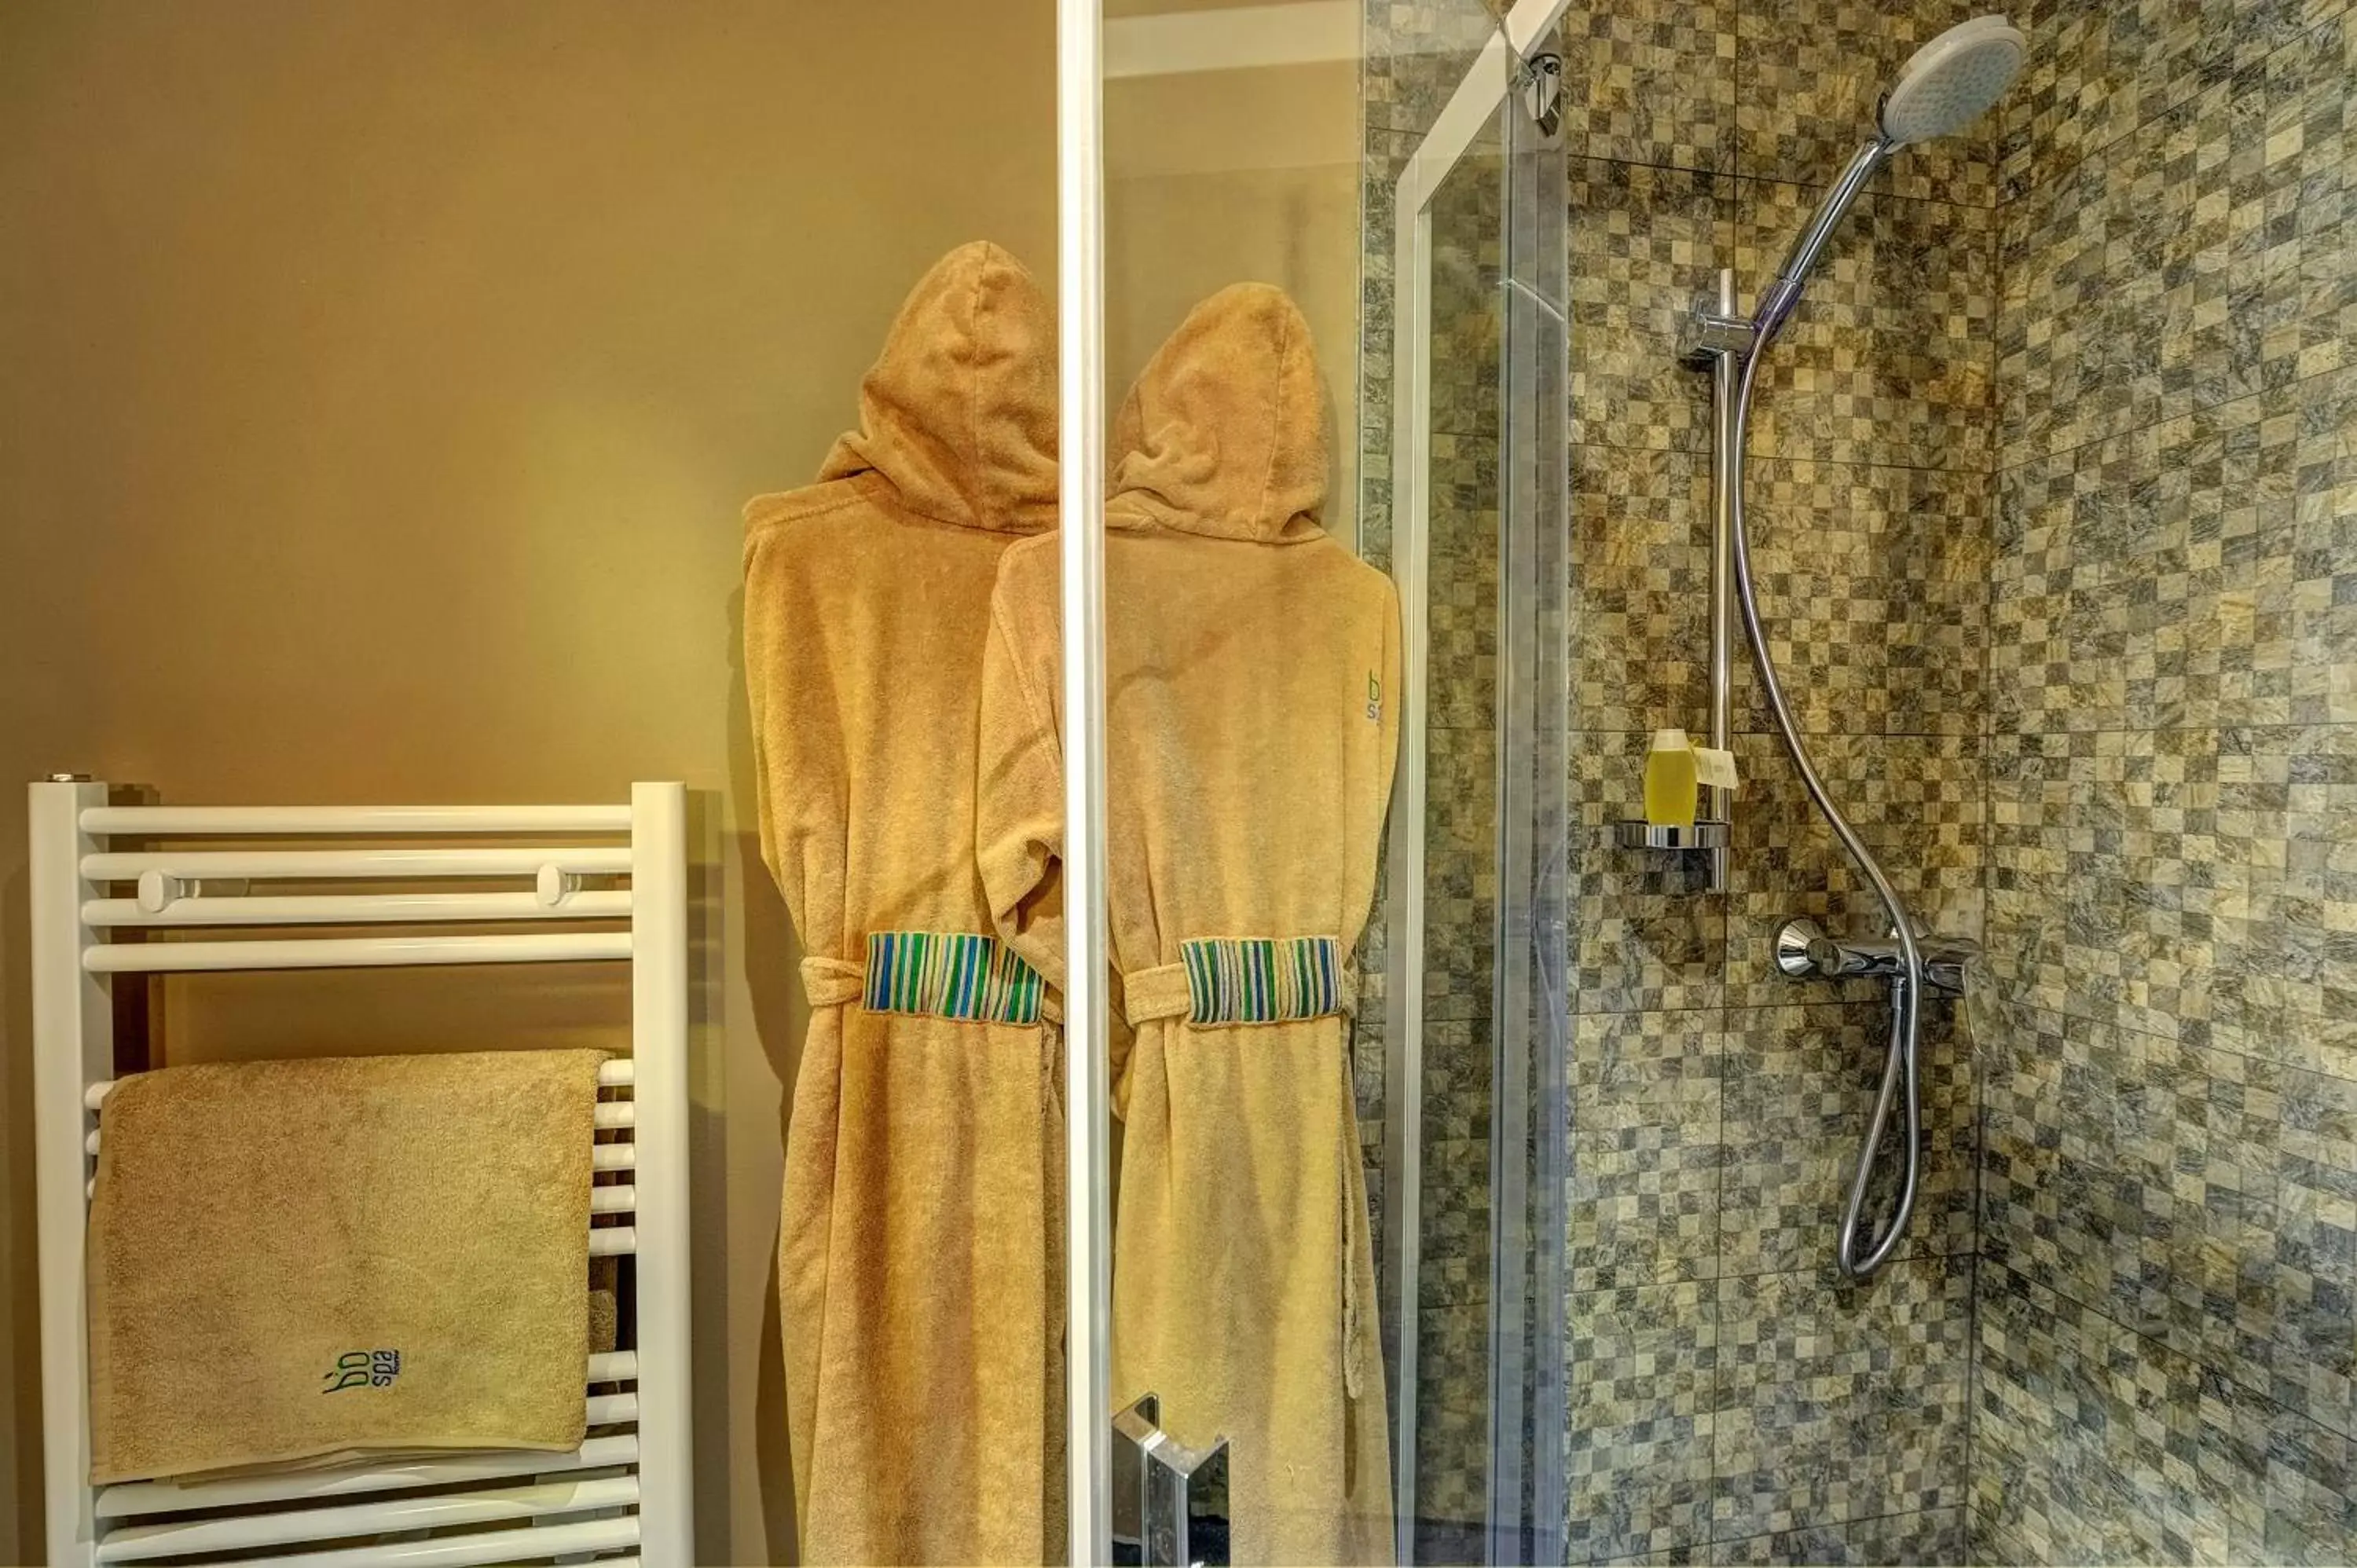 Shower, Bathroom in B’O Resort & Spa